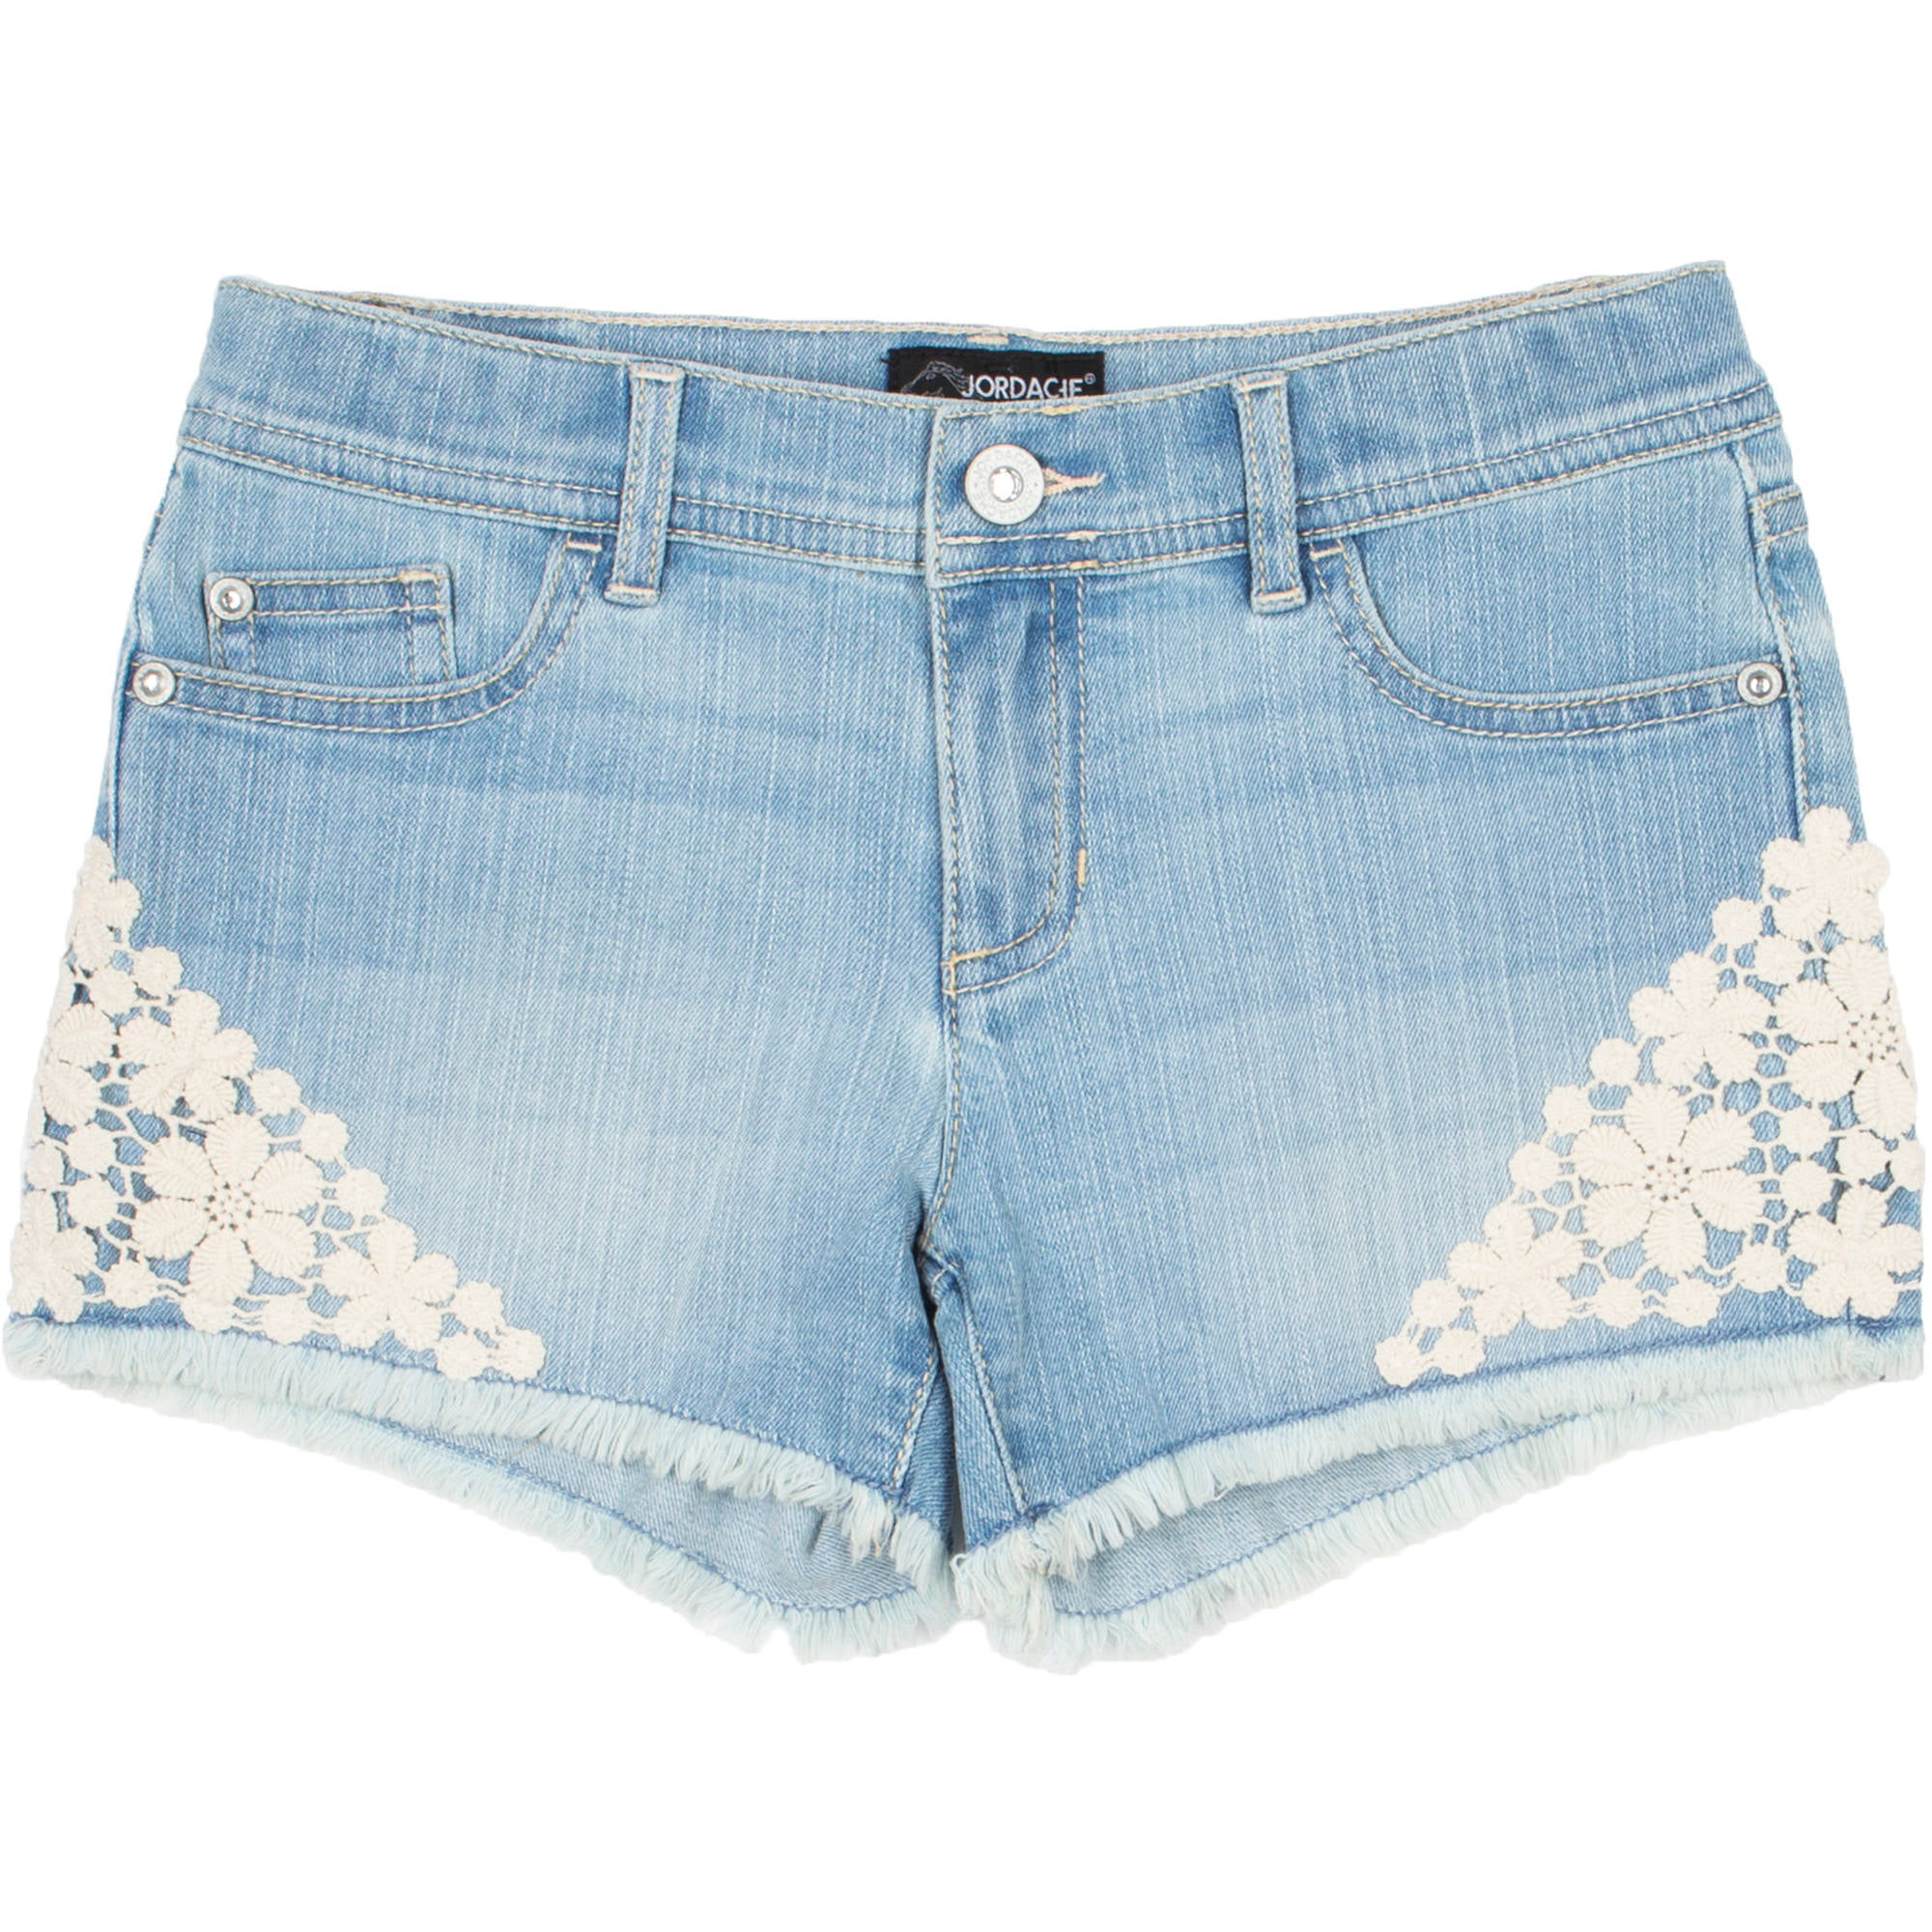 Jordache - Girls' Denim Fringe Cuff Denim Shorts - Walmart.com ...